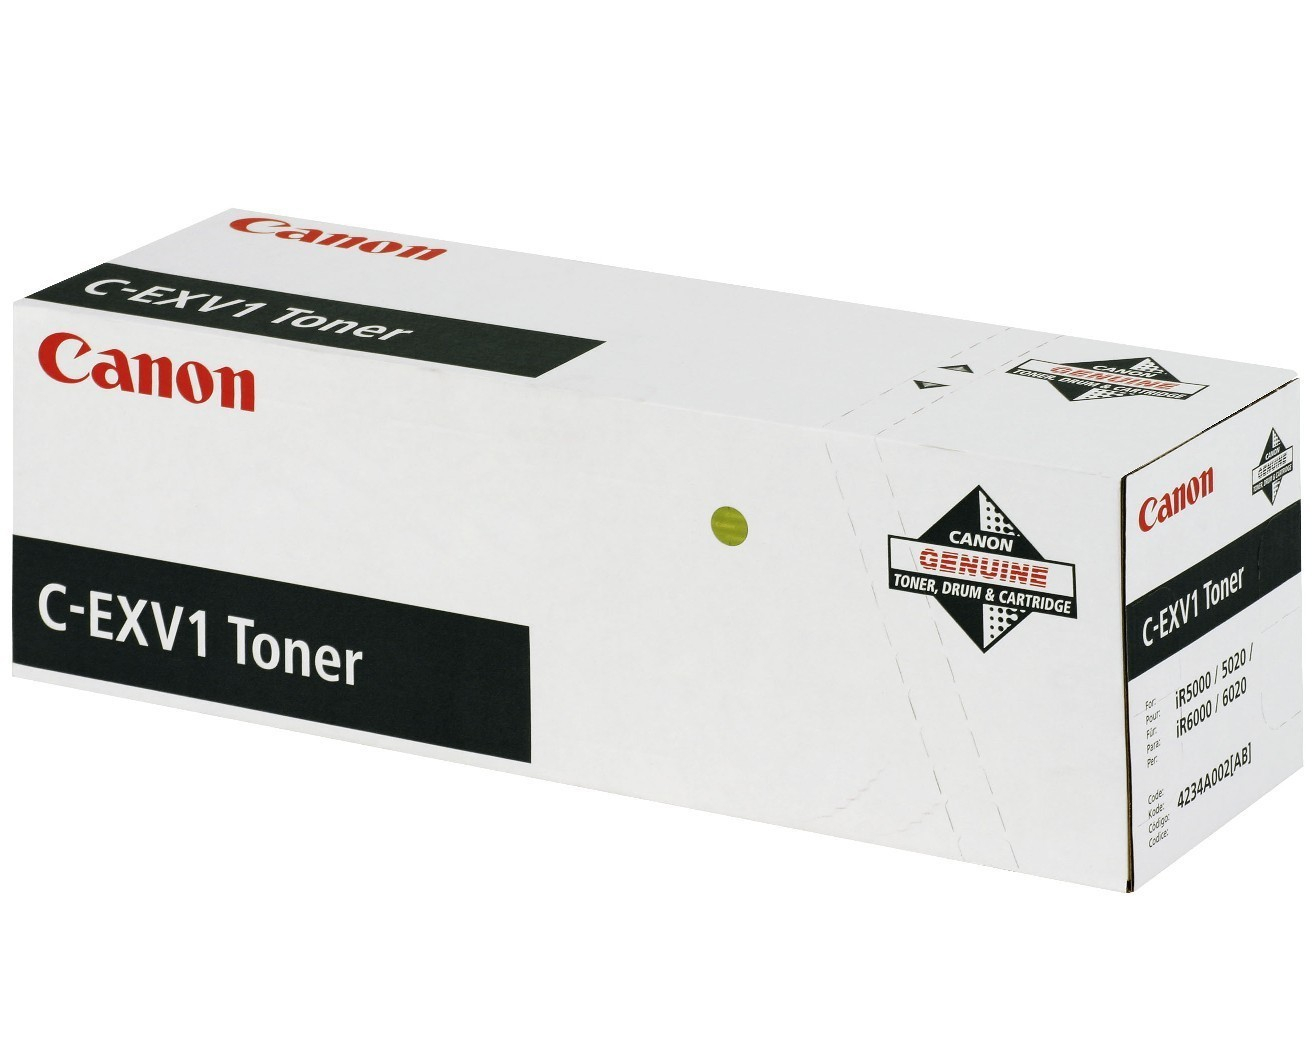 Original Toner Canon imageRUNNER 6000 (4234A002 / C-EXV1) Schwarz